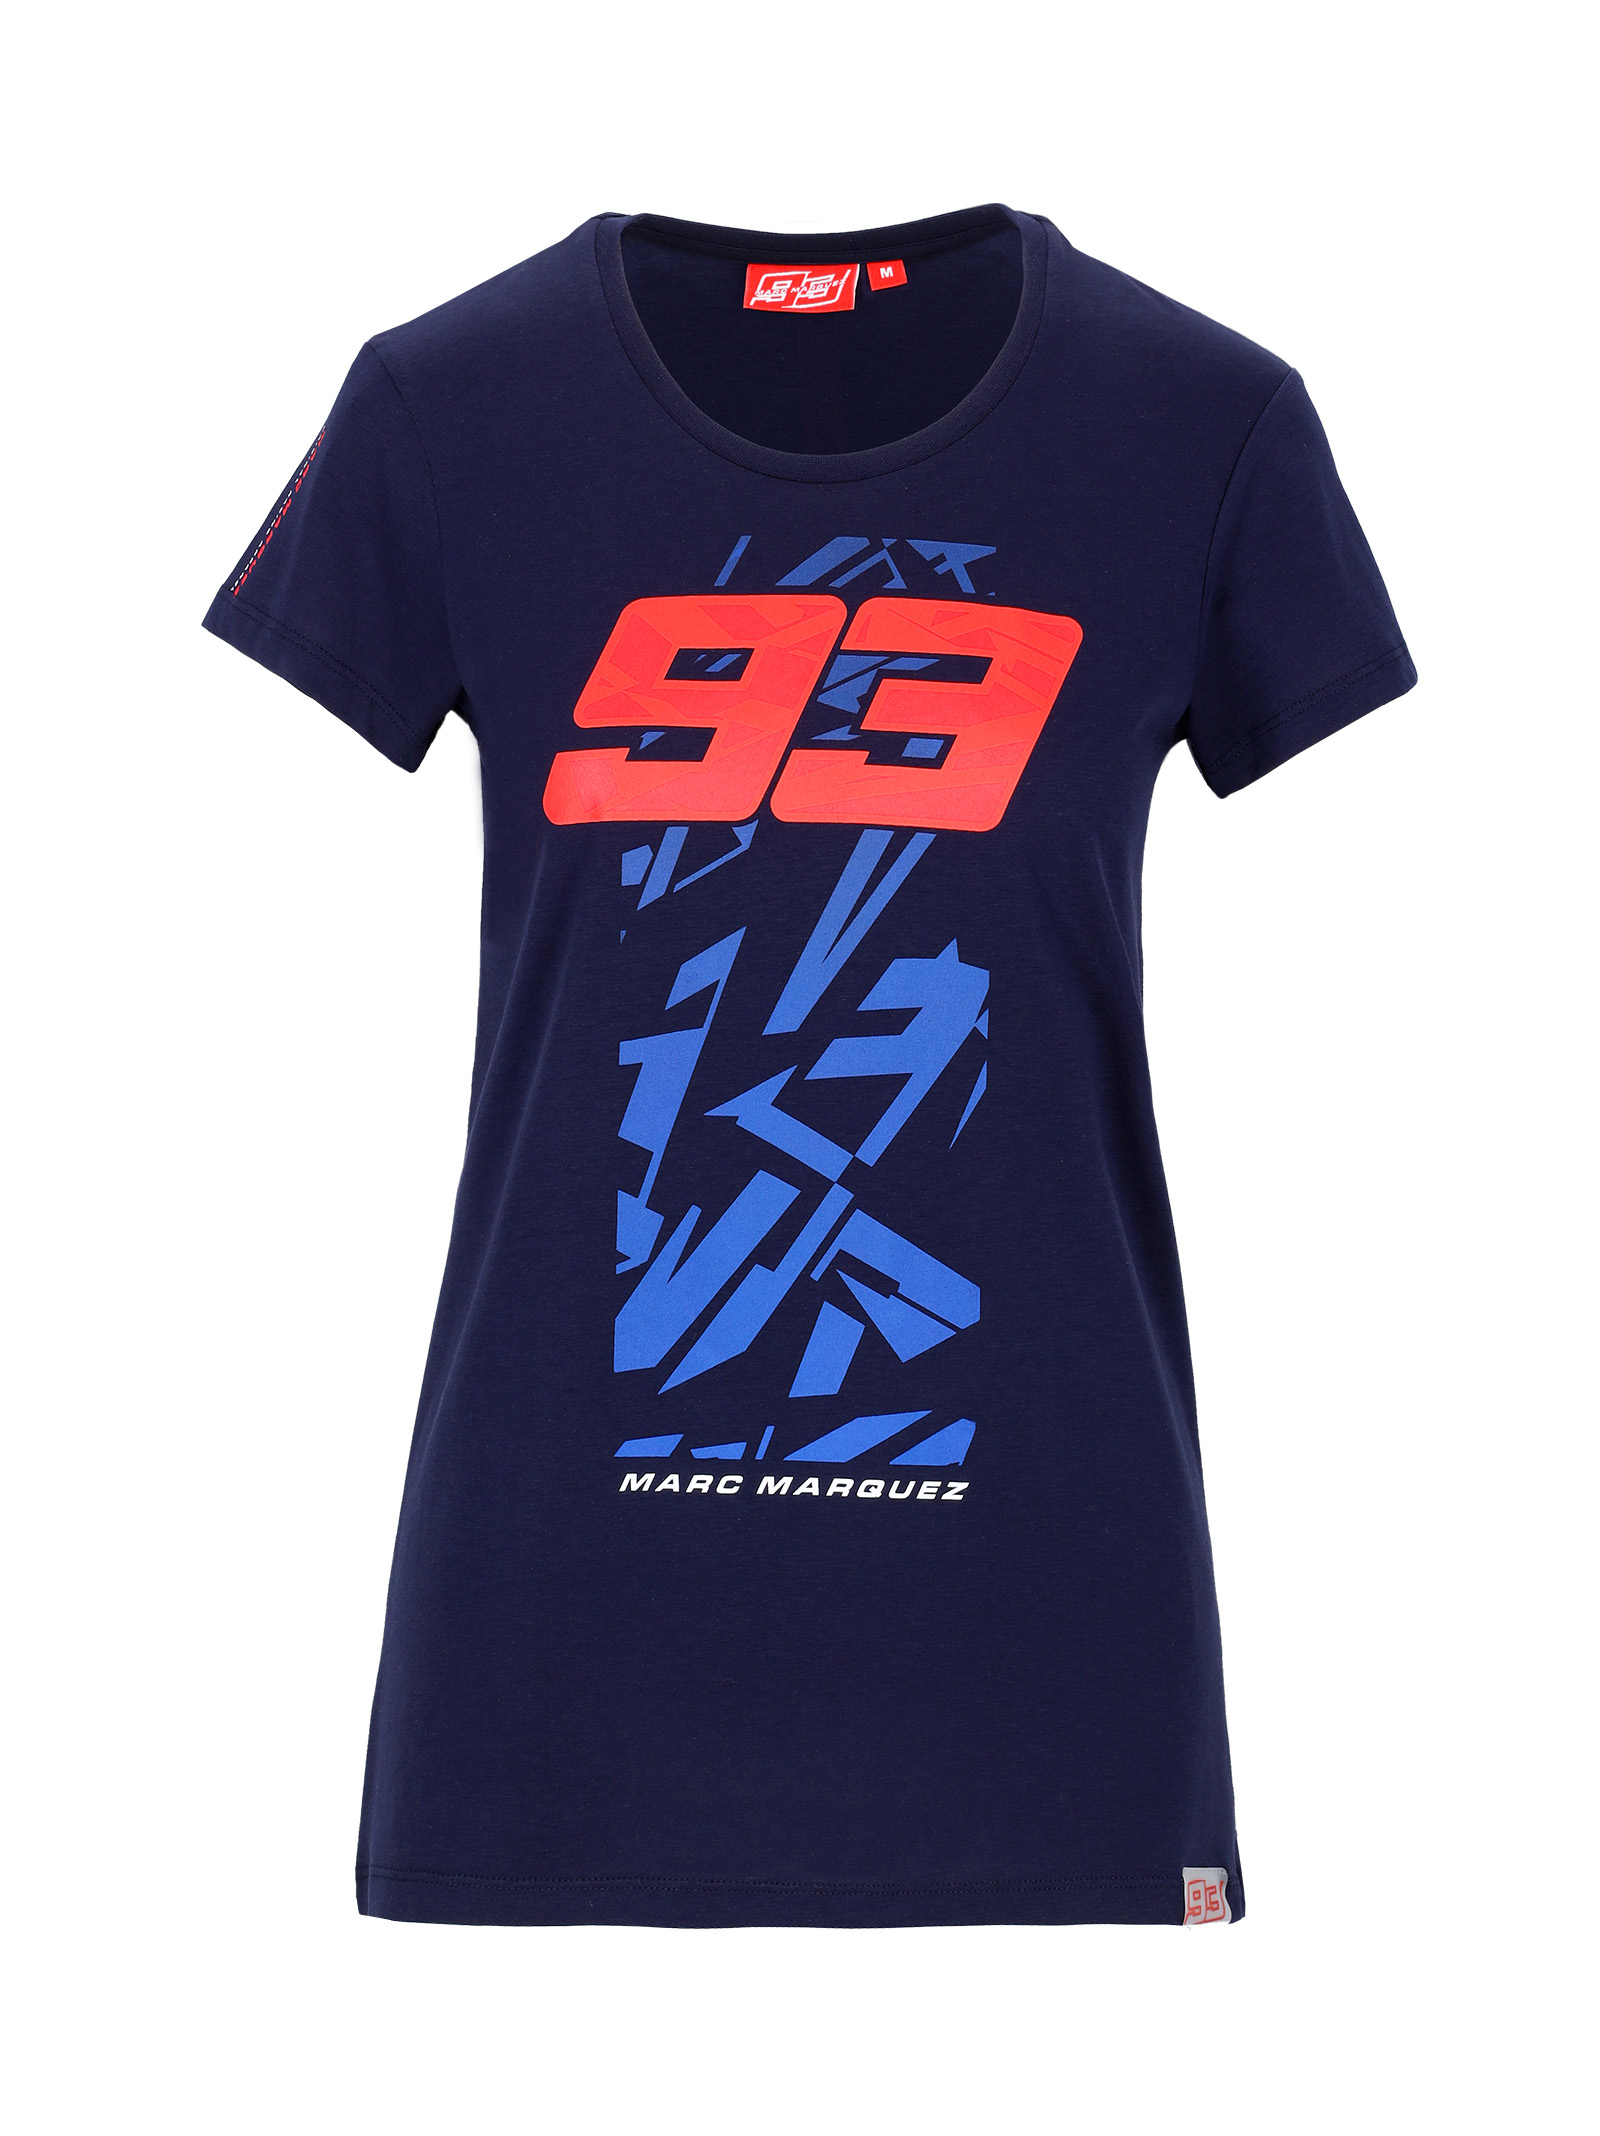 T-shirt femme MARC MARQUEZ 93 bleu marine